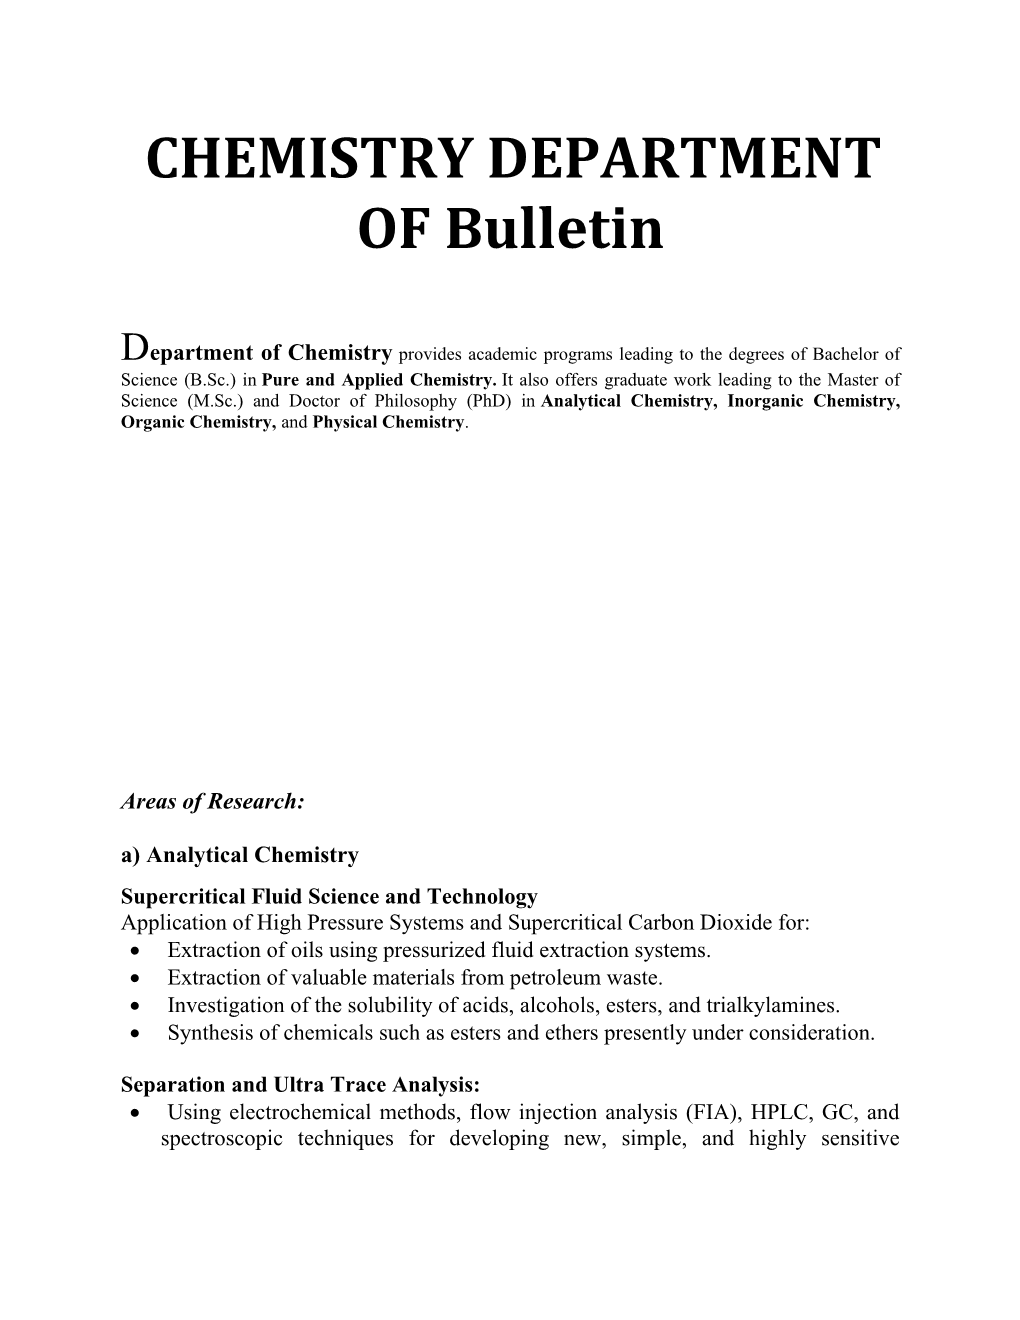 CHEMISTRYDEPARTMENTOF Bulletin